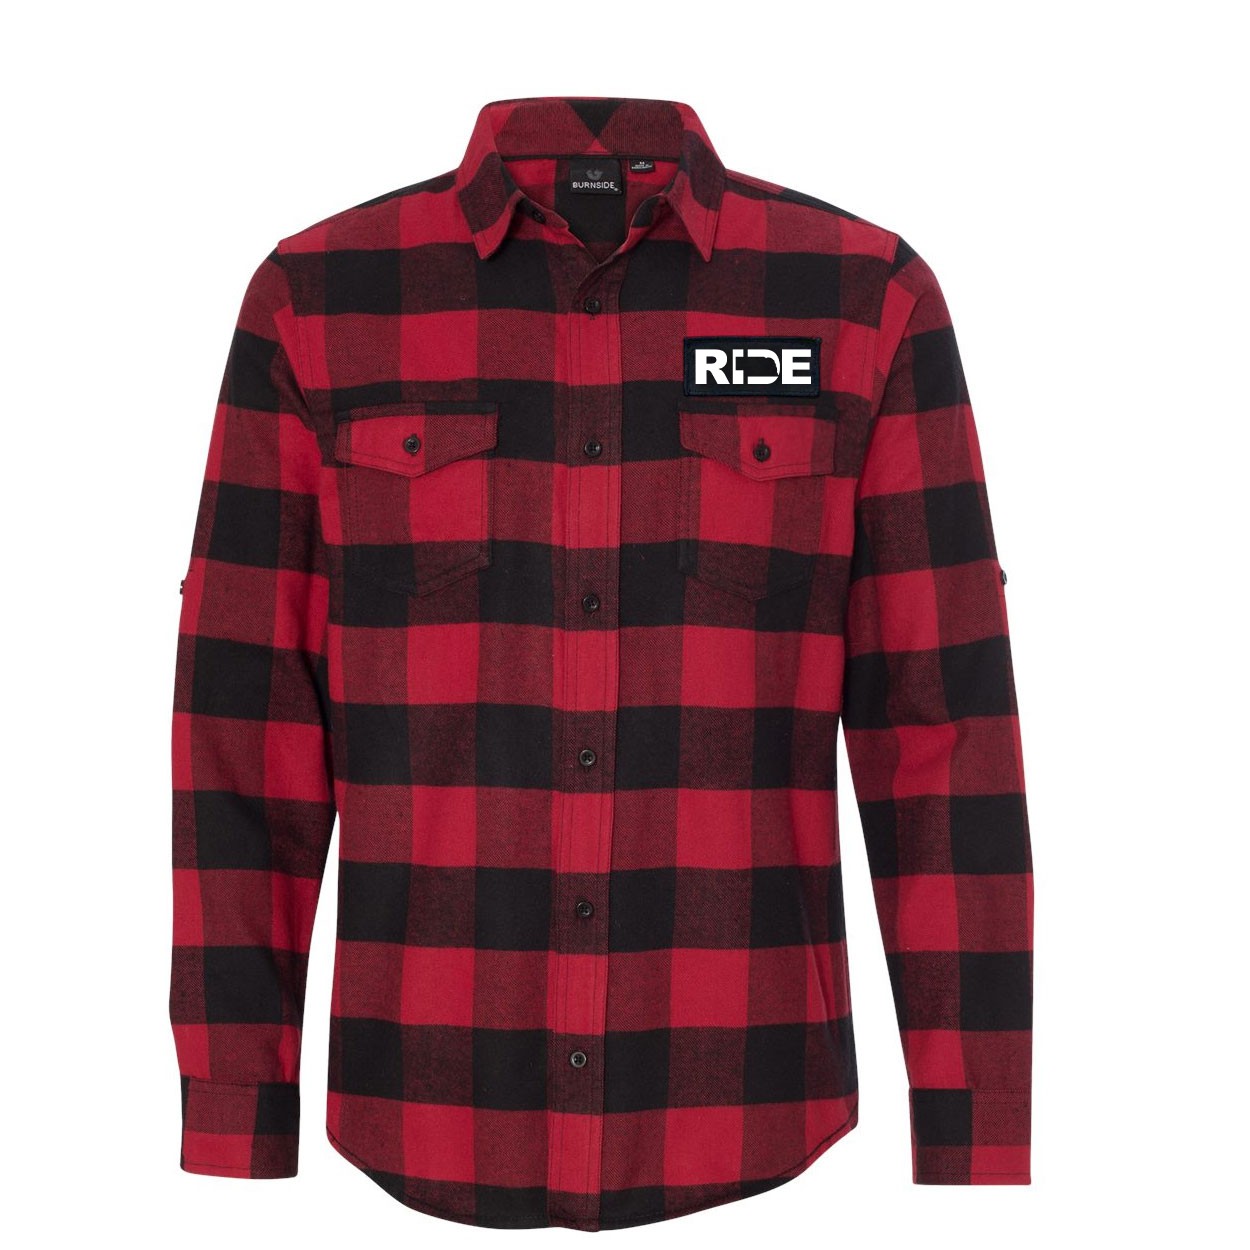 Ride Nebraska Classic Unisex Long Sleeve Woven Patch Flannel Shirt Red/Black Buffalo (White Logo)